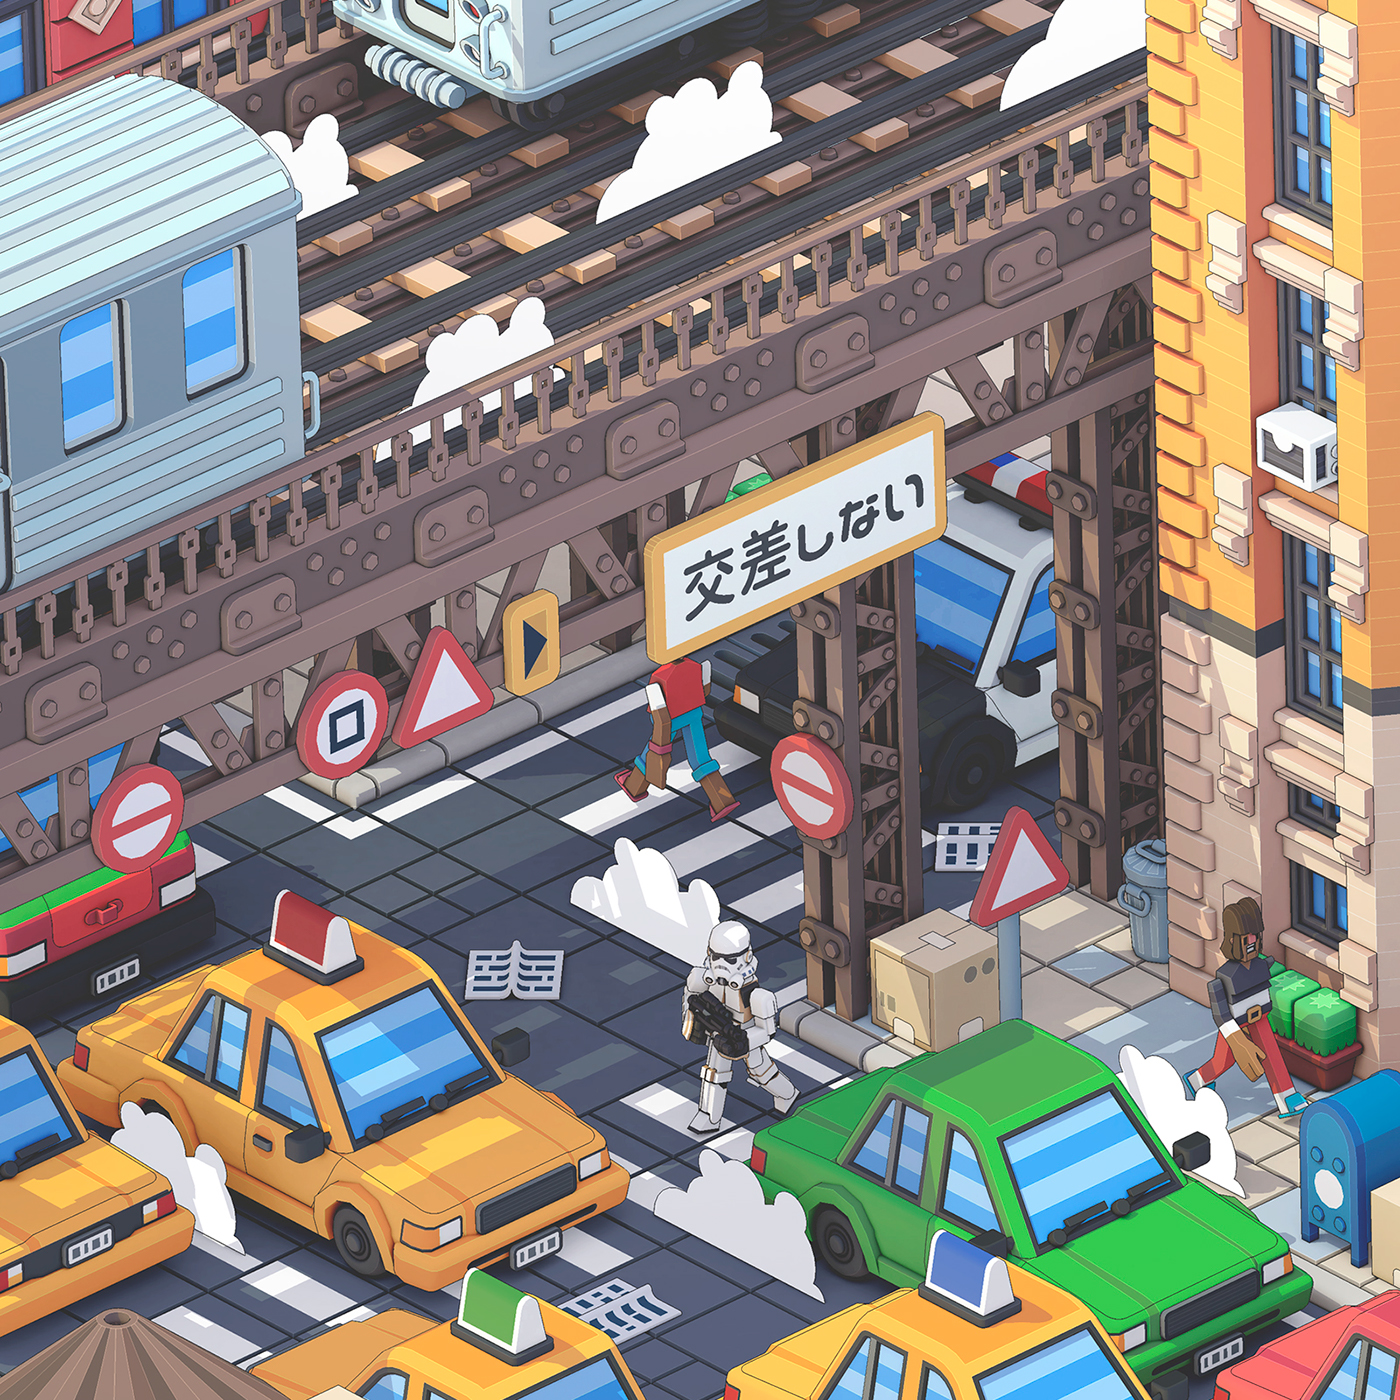 Isometric voxel ILLUSTRATION  eBoy gta New York city Urban Landscape SketchUP